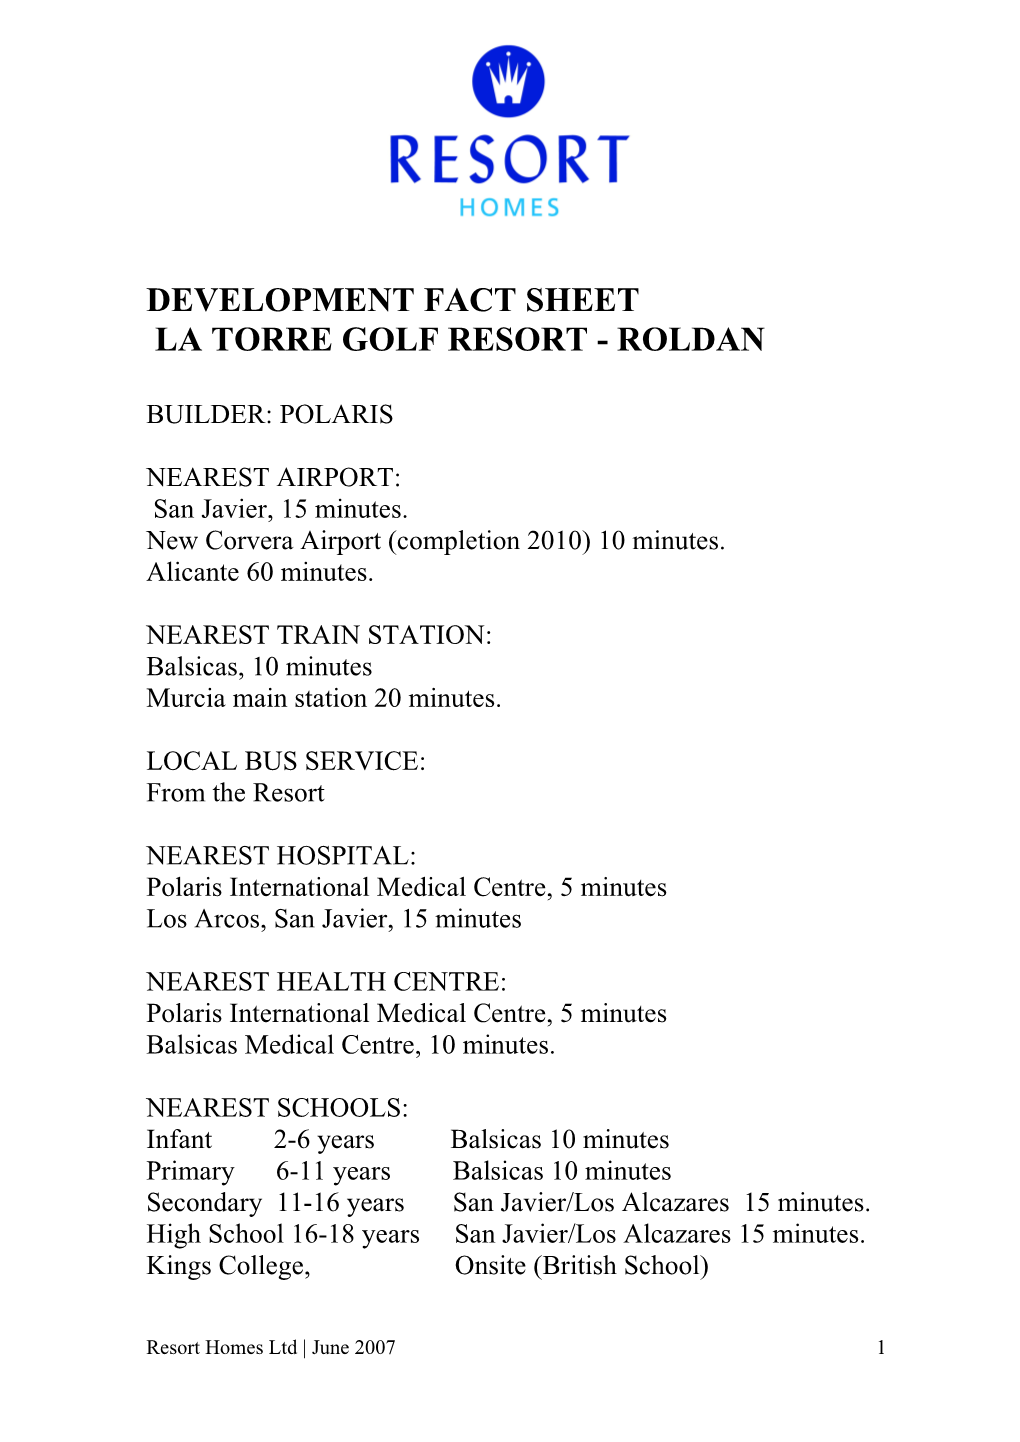 Development Fact Sheet La Torre Golf Resort - Roldan